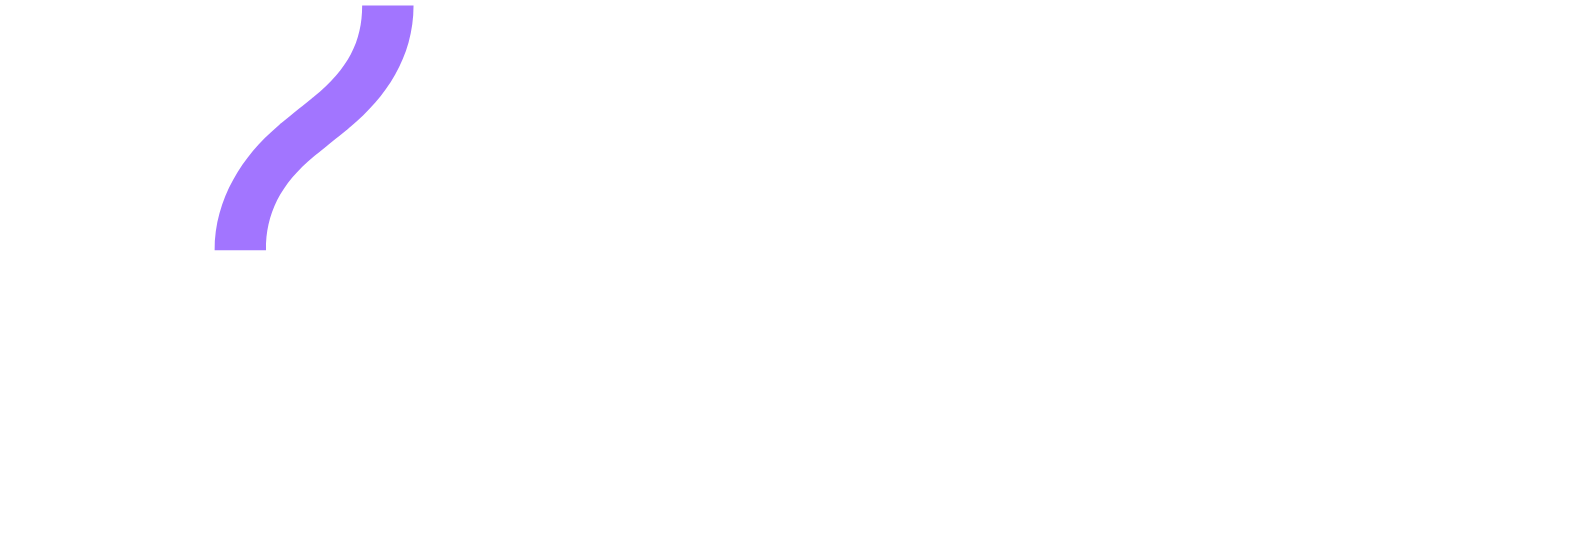 Exact Sciences Logo groß für dunkle Hintergründe (transparentes PNG)